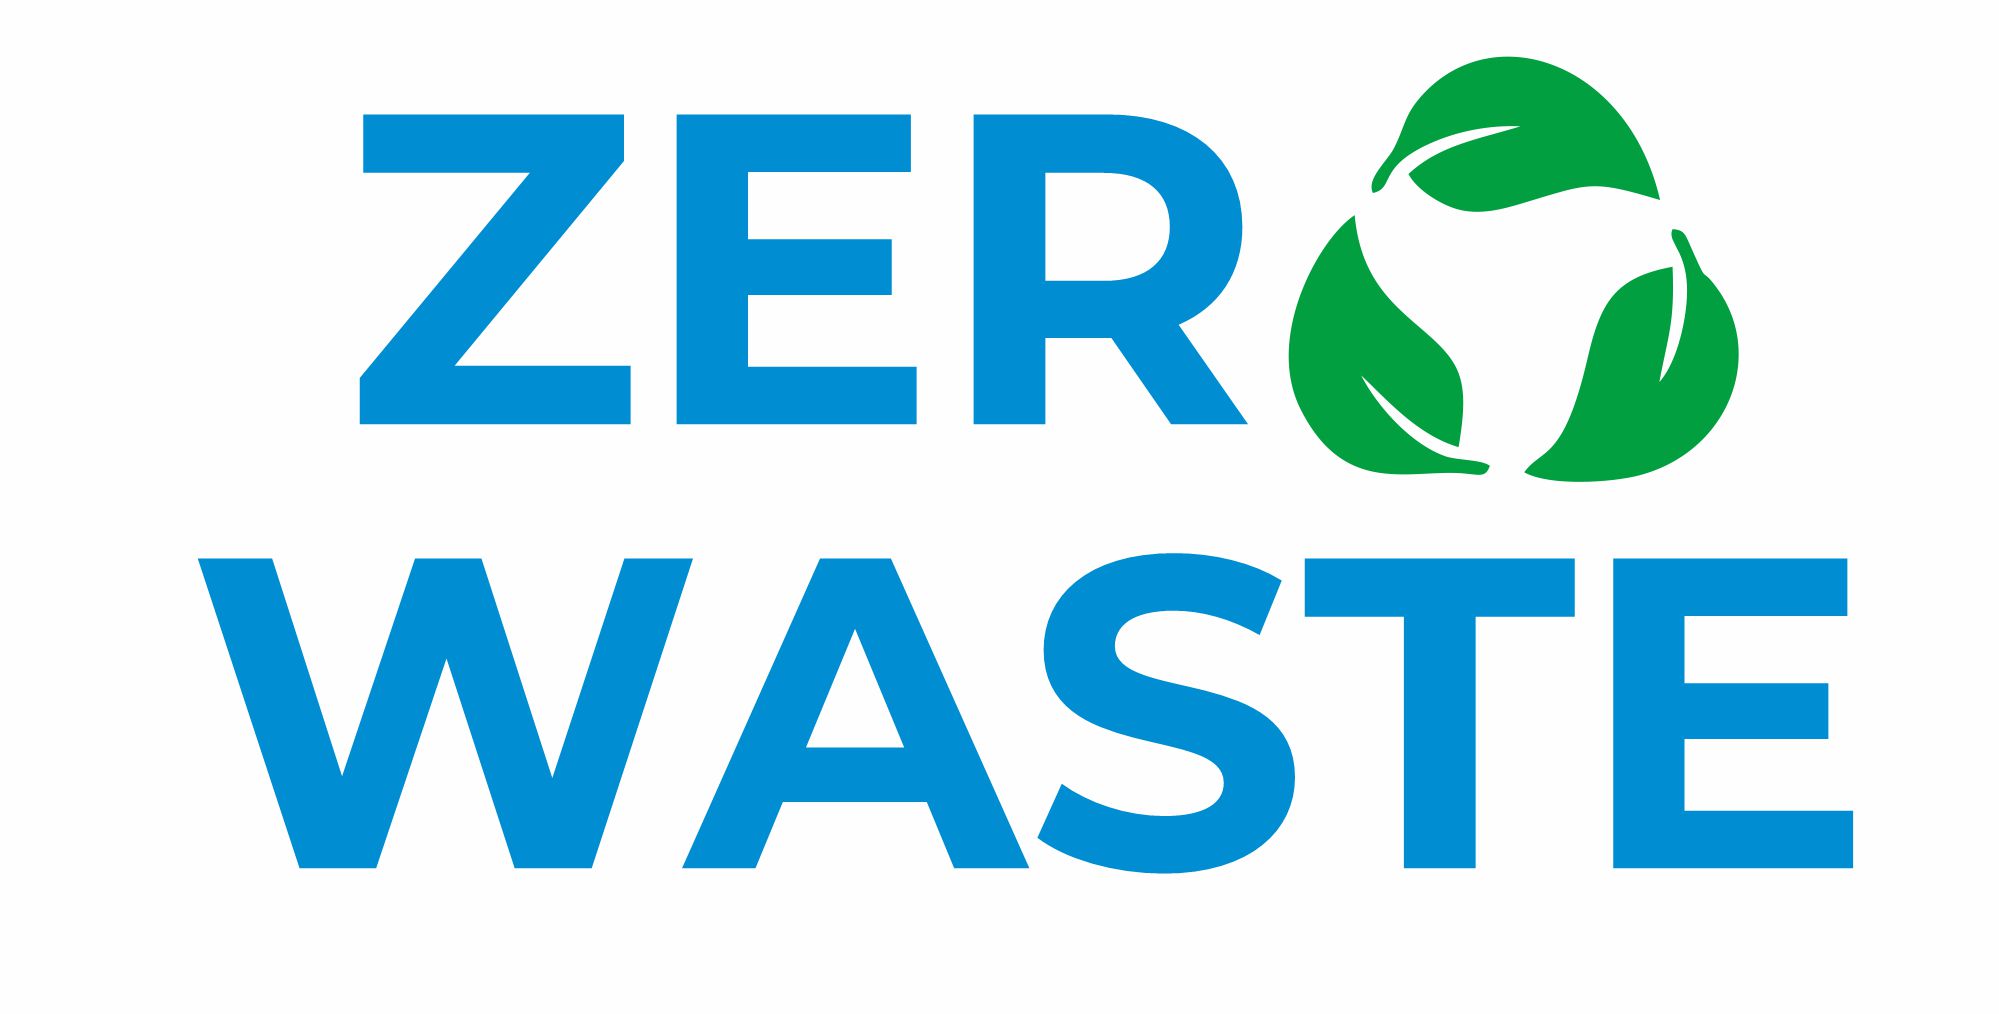 Ekologiczny materac, naturalne materace, eco friendly, zero waste